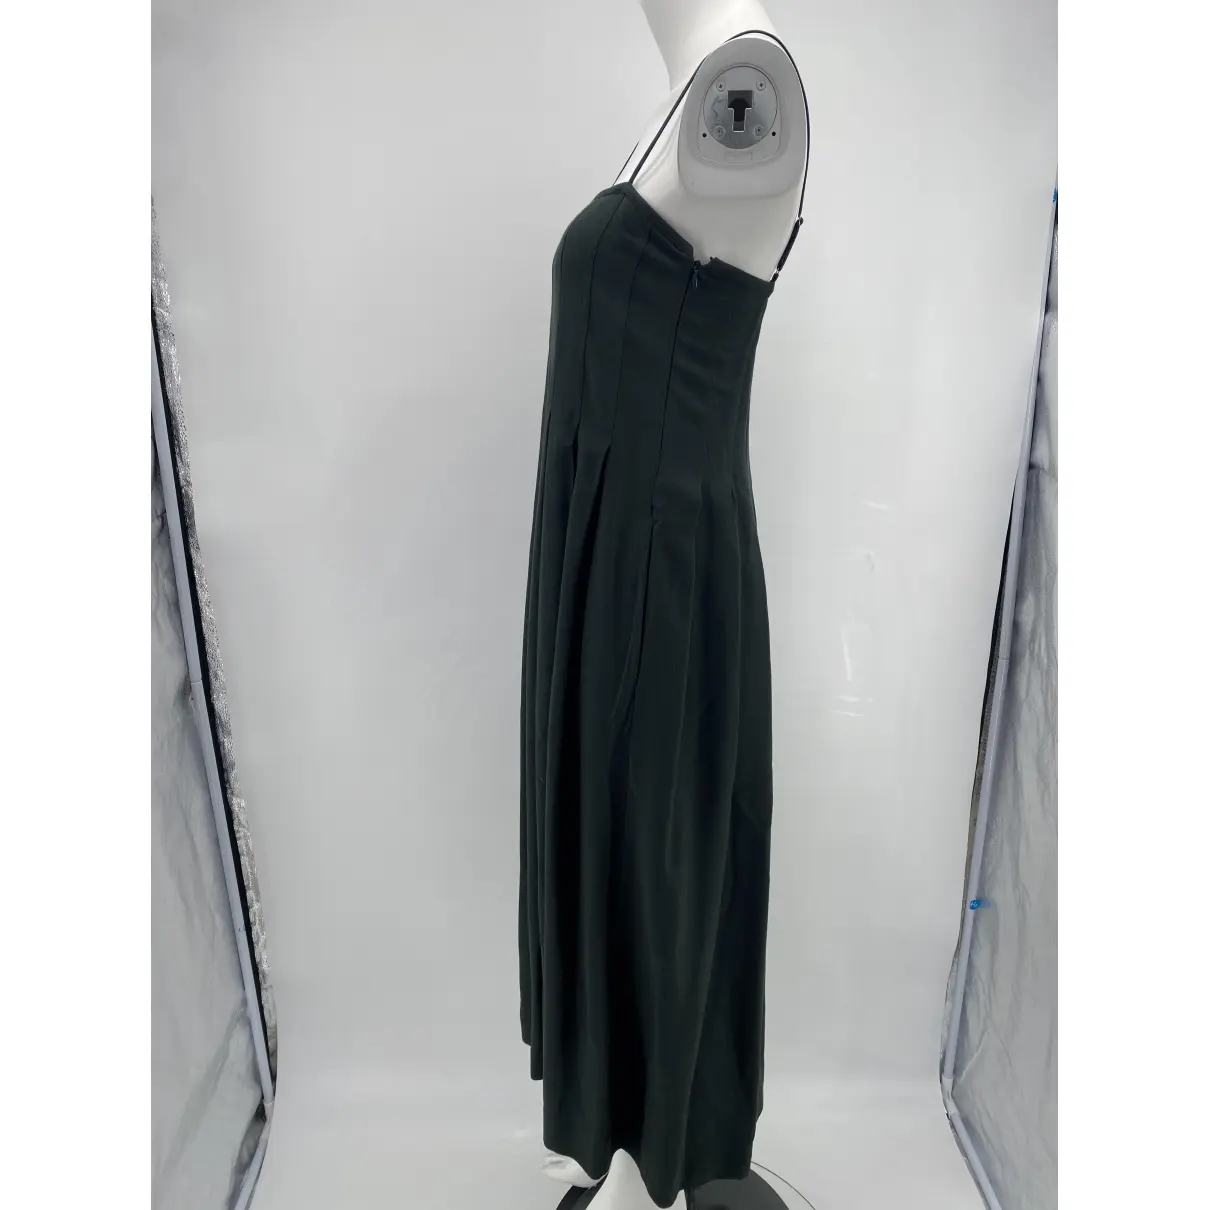 Buy Three Graces London Mid-length dress online